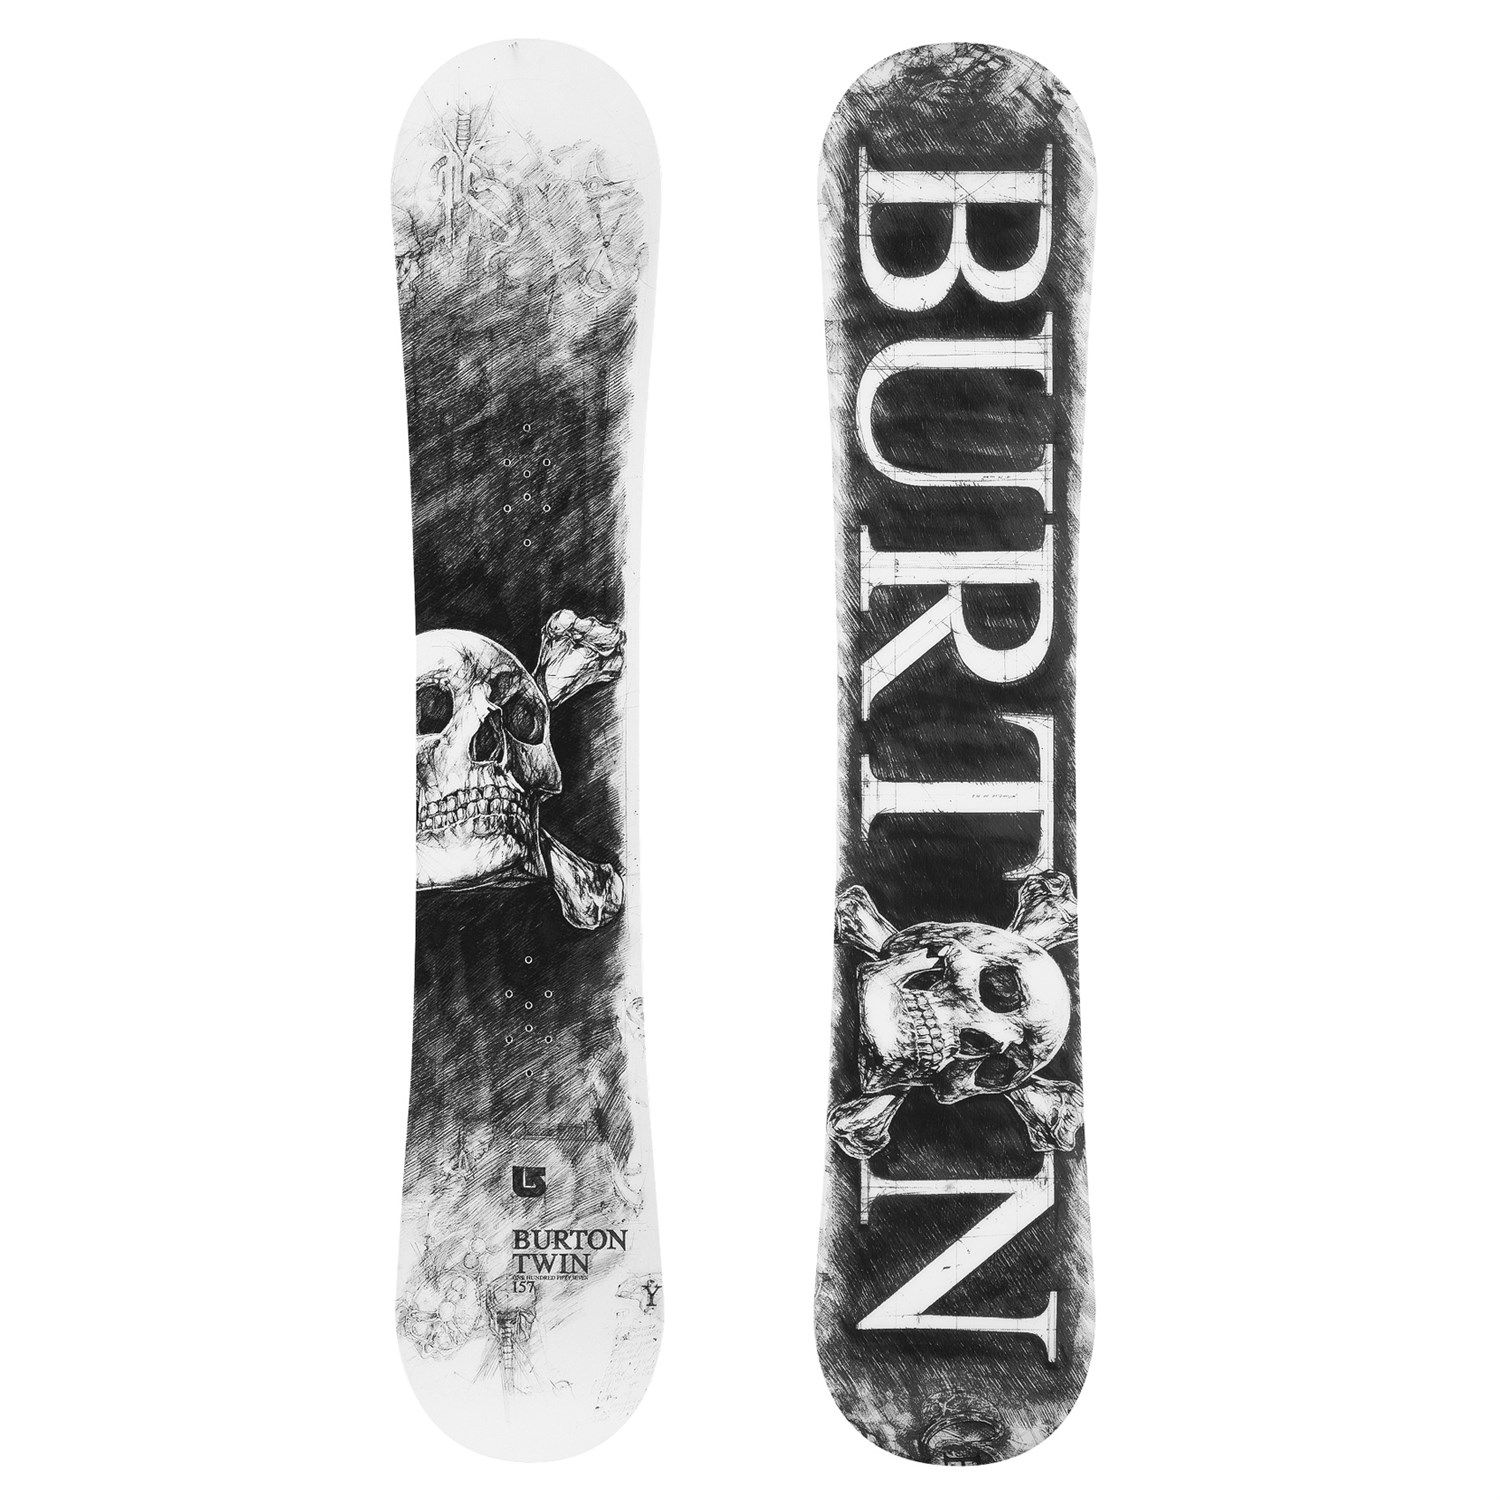 Burton Twin Snowboard (Black) 2008 | evo